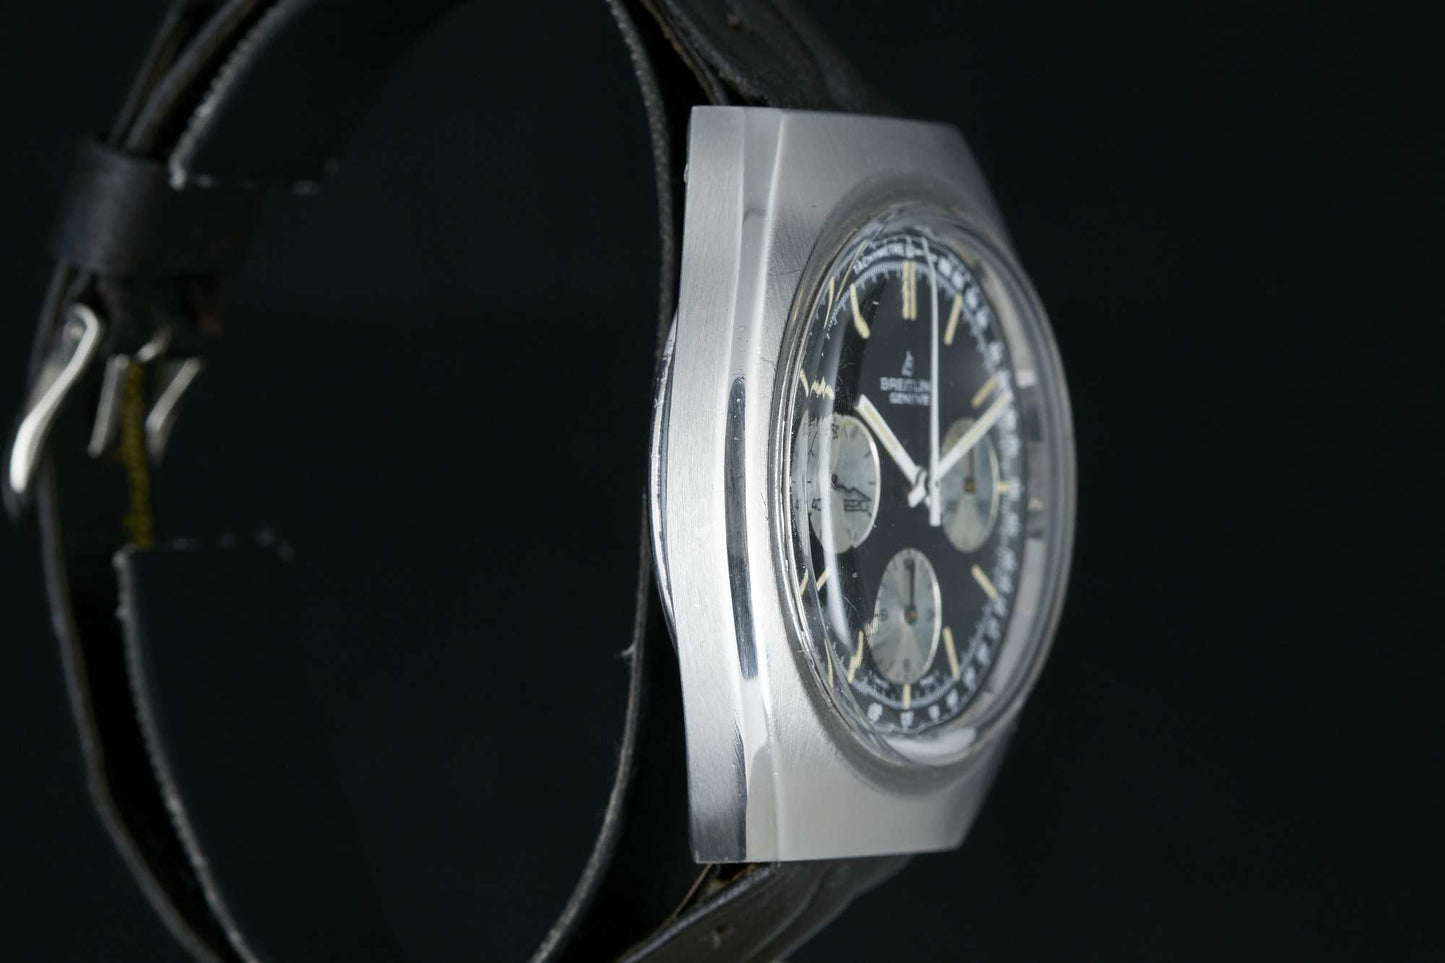 Breitling 1450 Chronograph